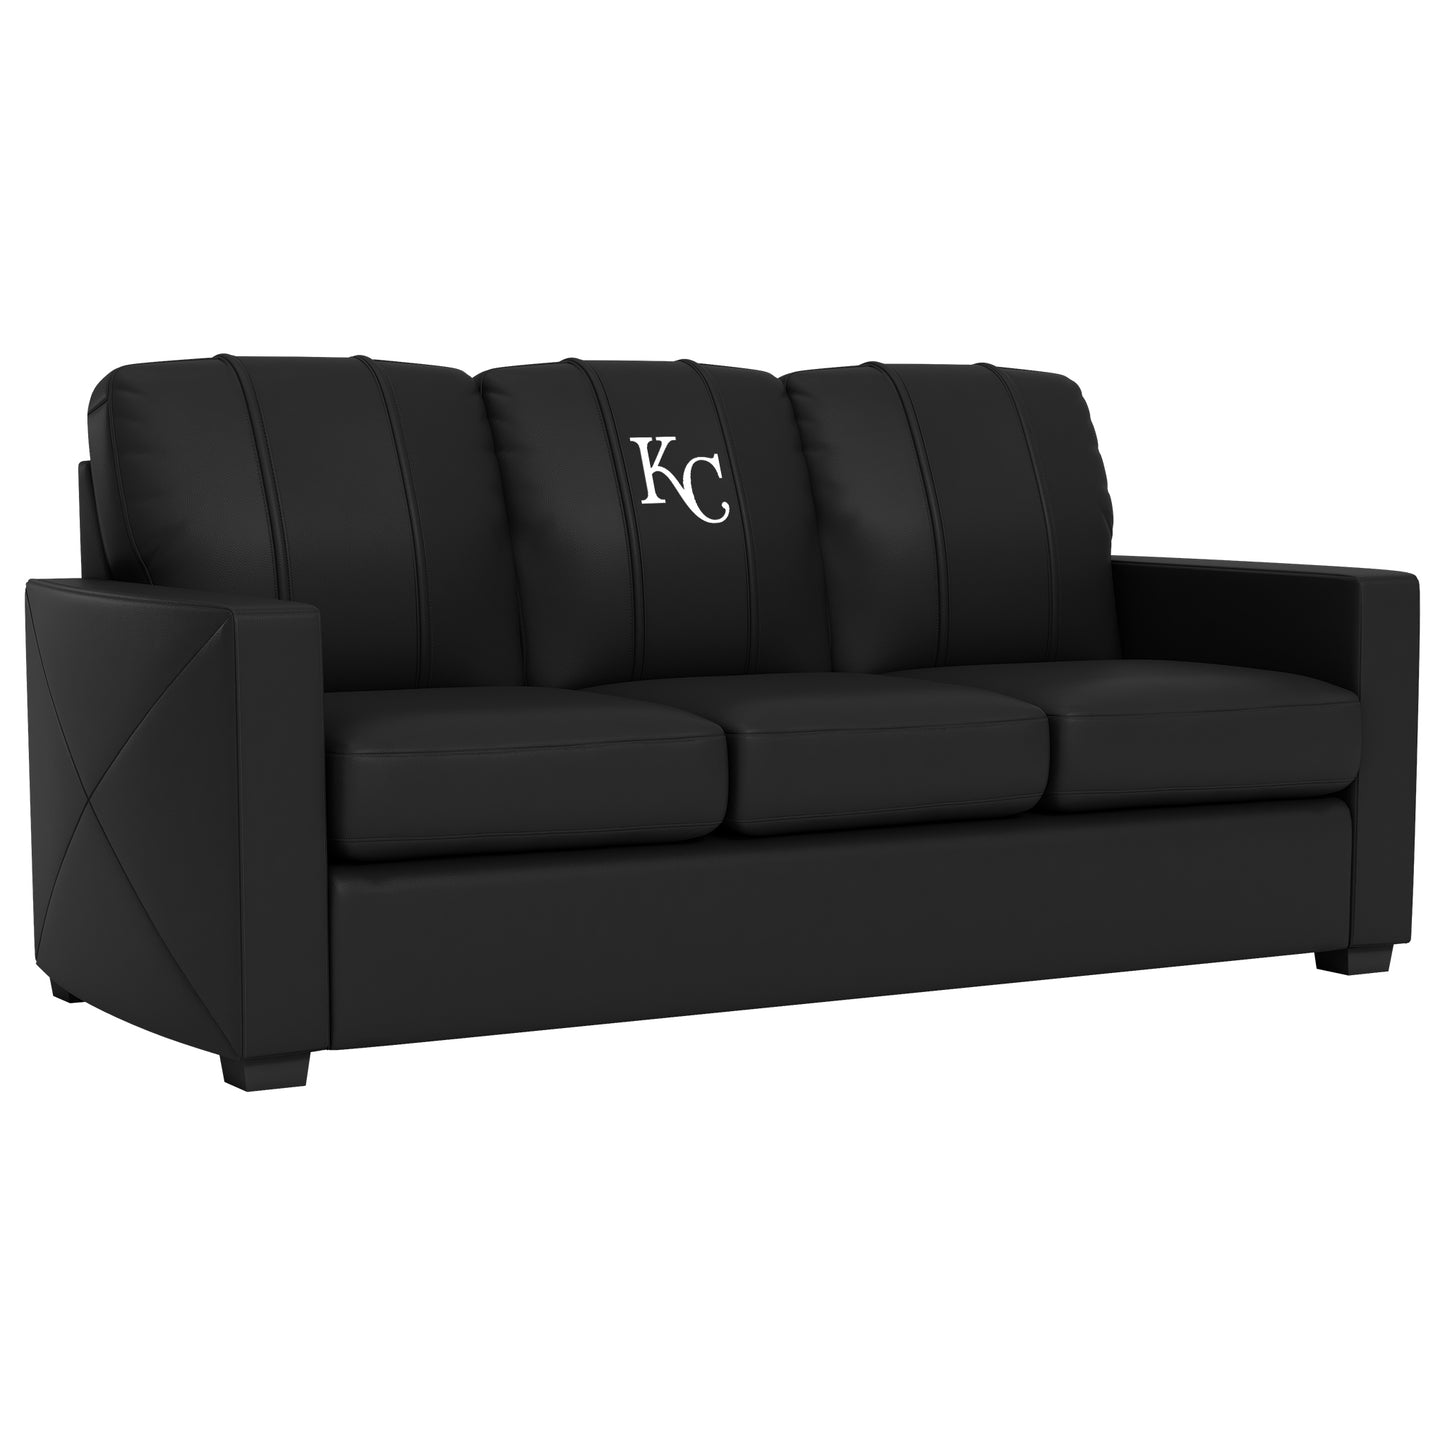 Silver Sofa with Kansas City Royals Secondary